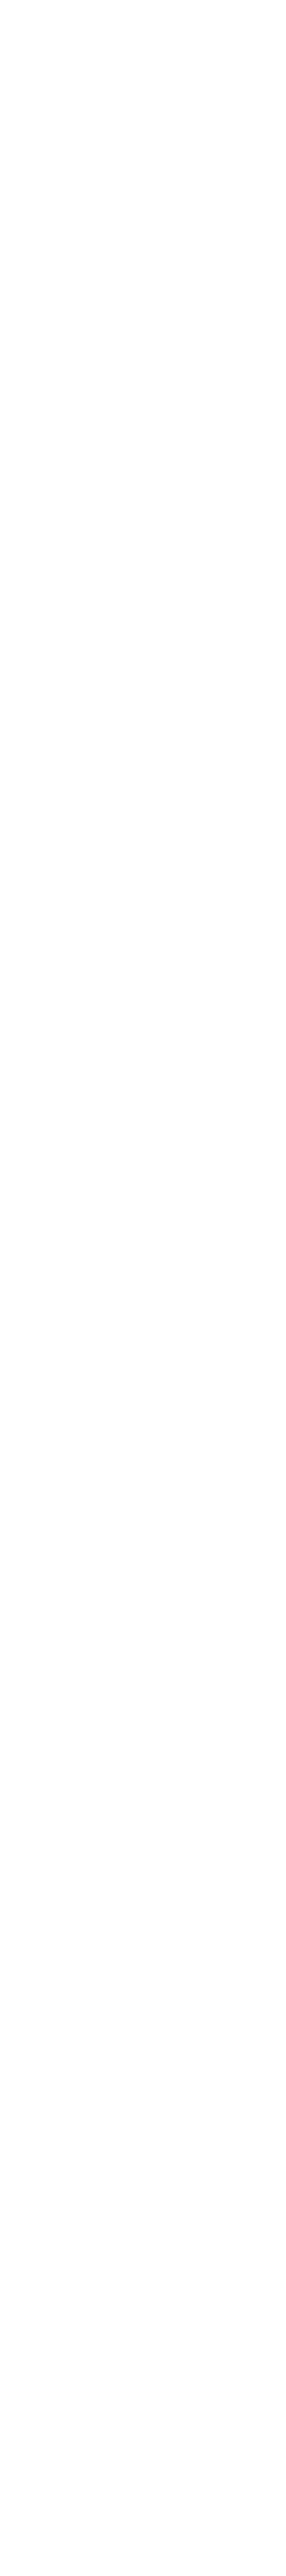 Logotype Icon peru logo brand